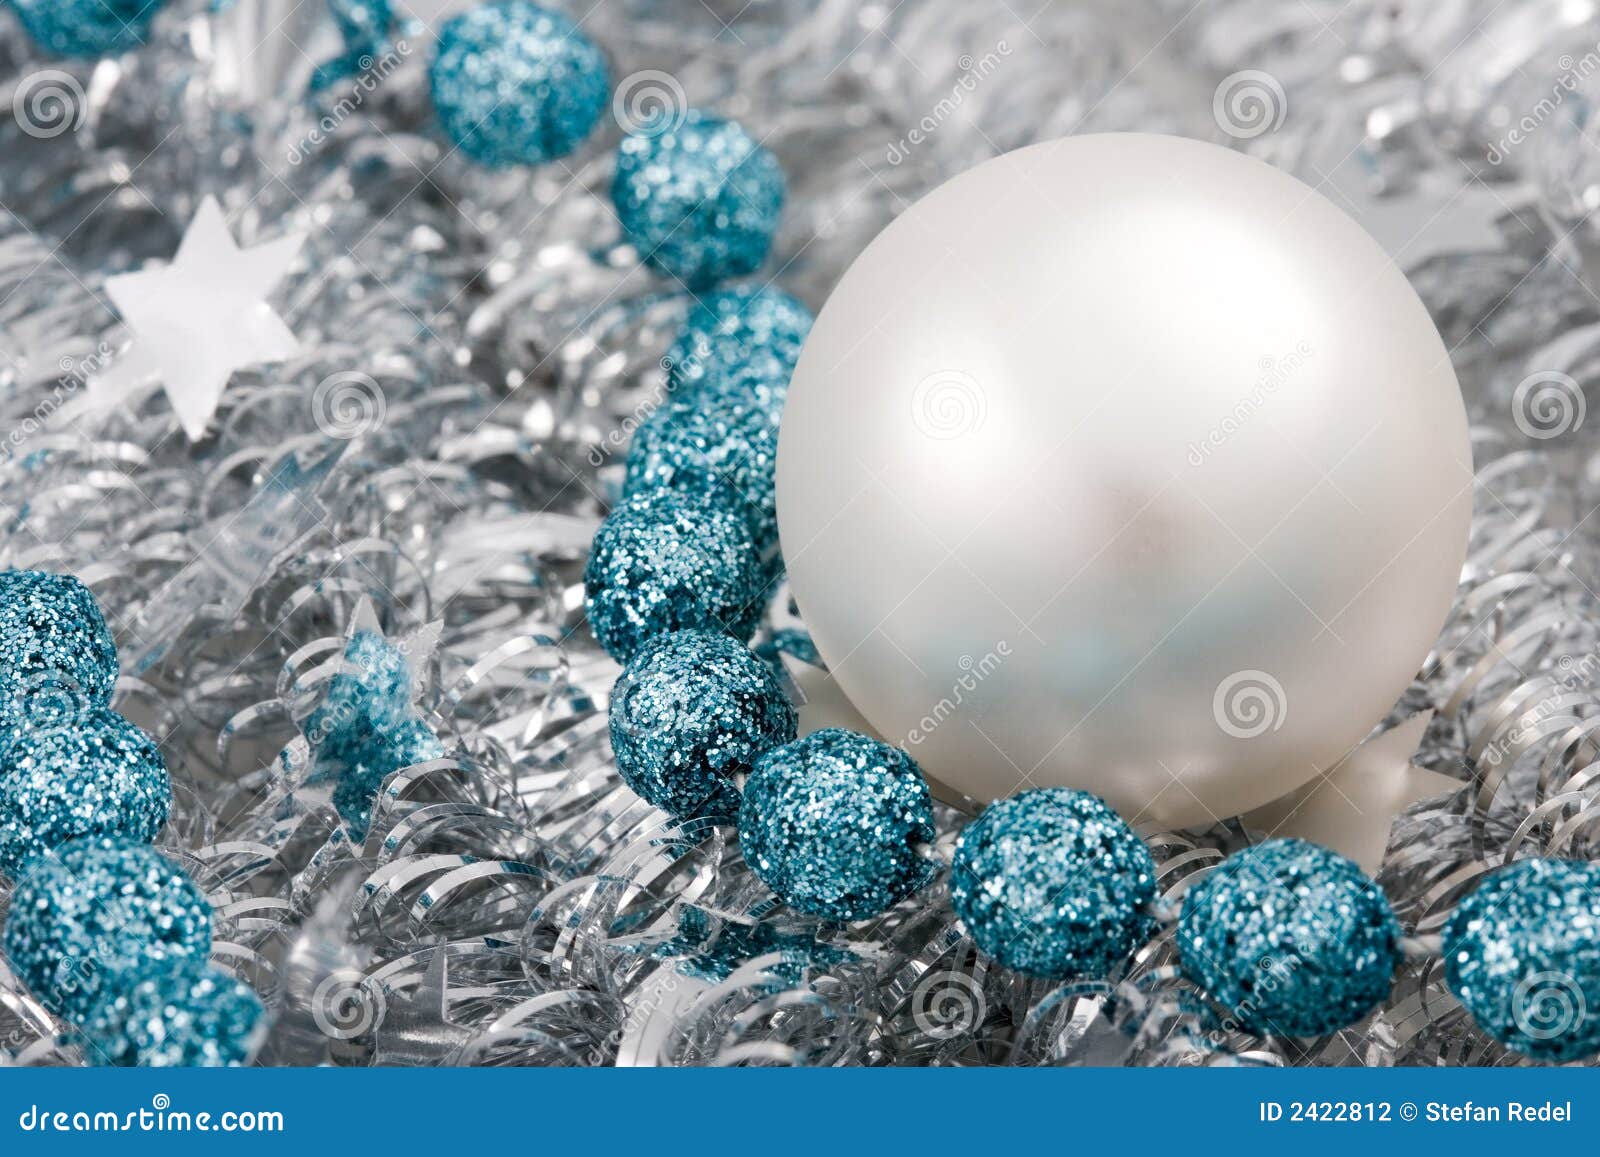 Blue and Silver Christmas Ball Stock Photo - Image of emblazonment ...